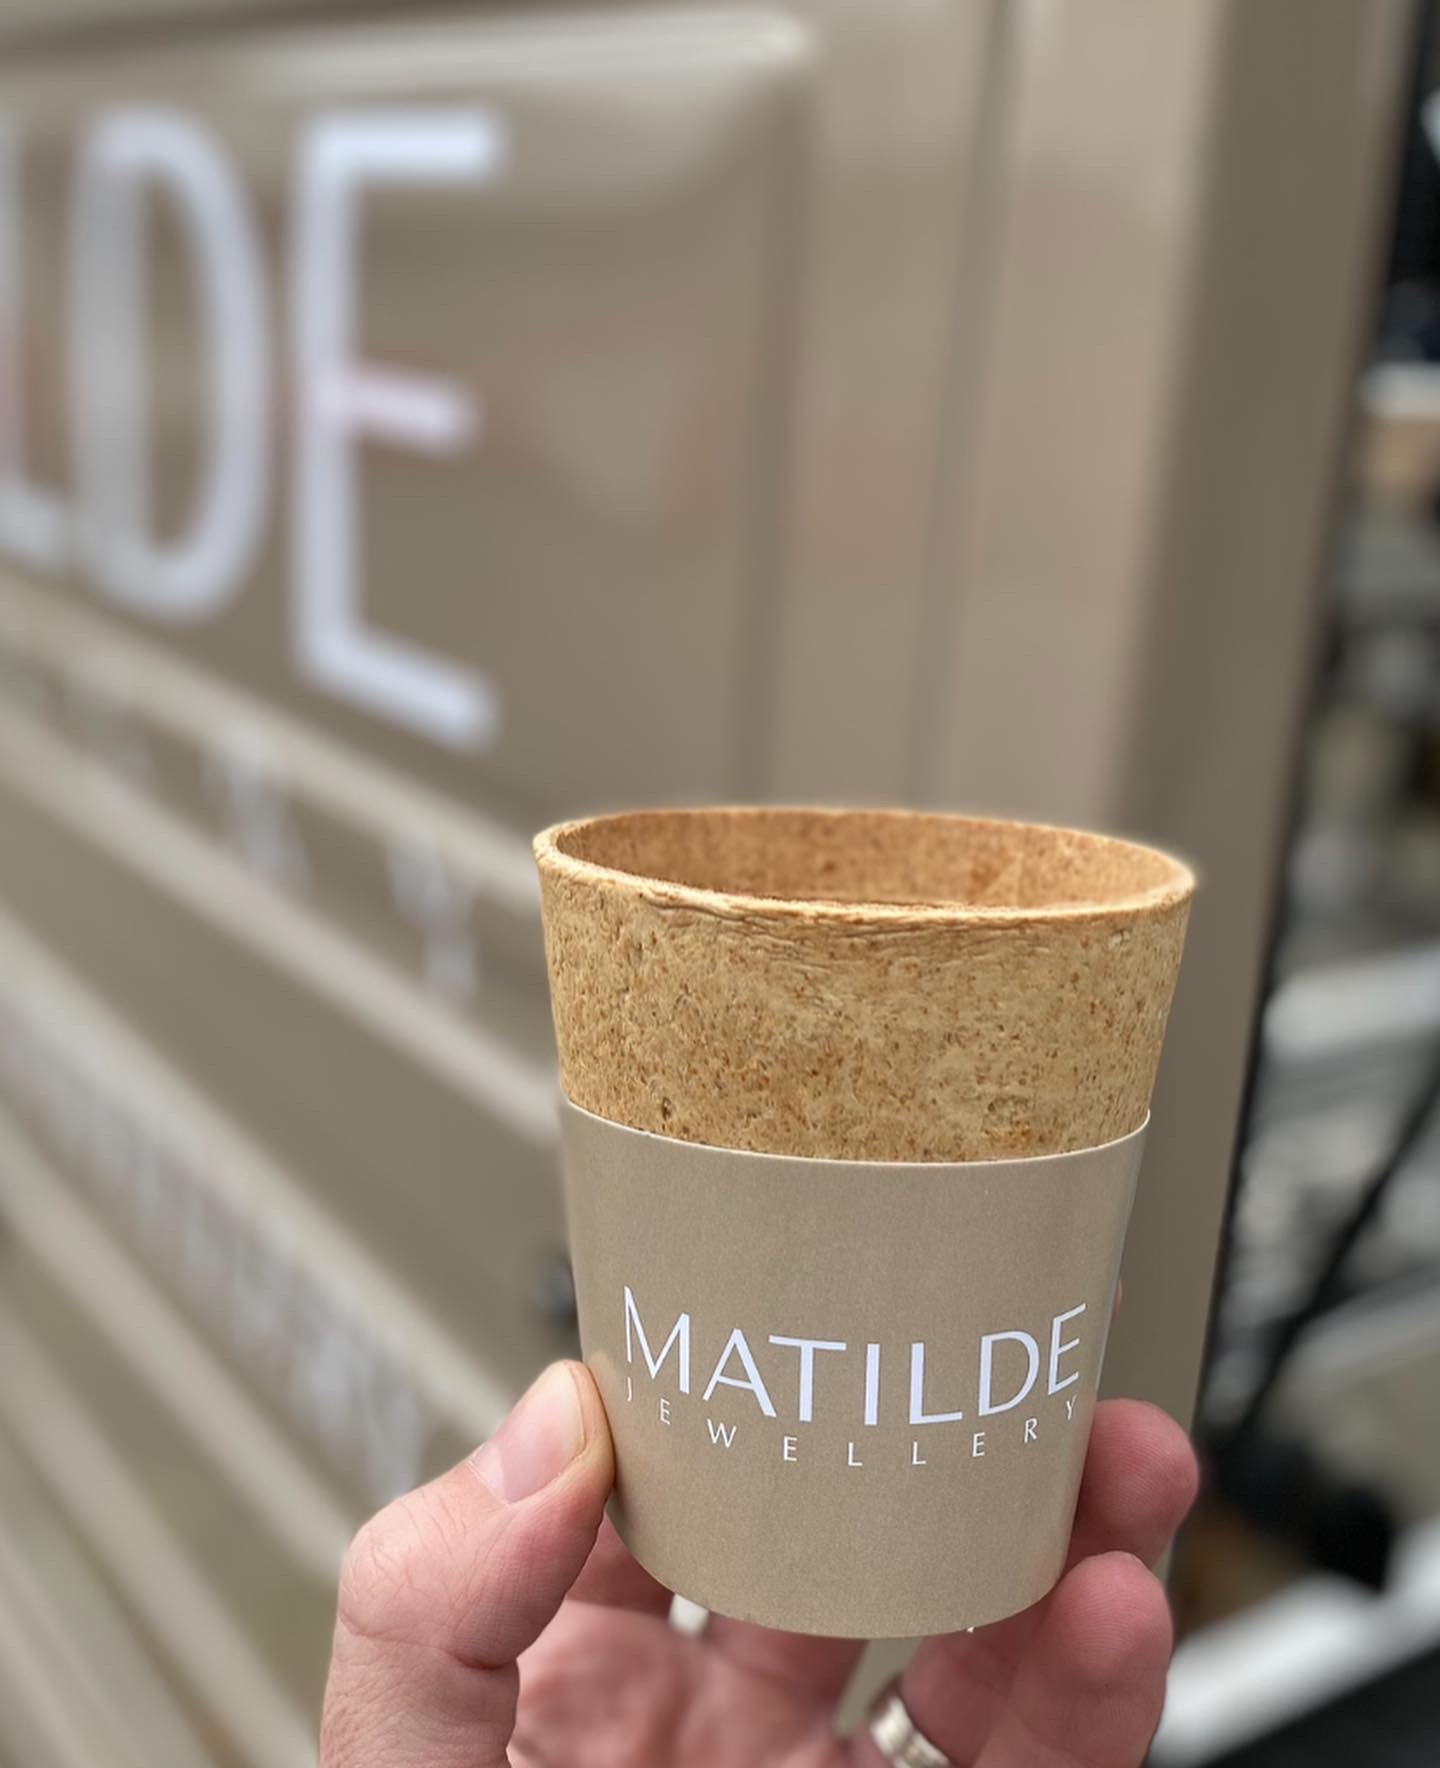 The Mobile Coffee Bean Matilde jewellery branded bespoke coffee cups